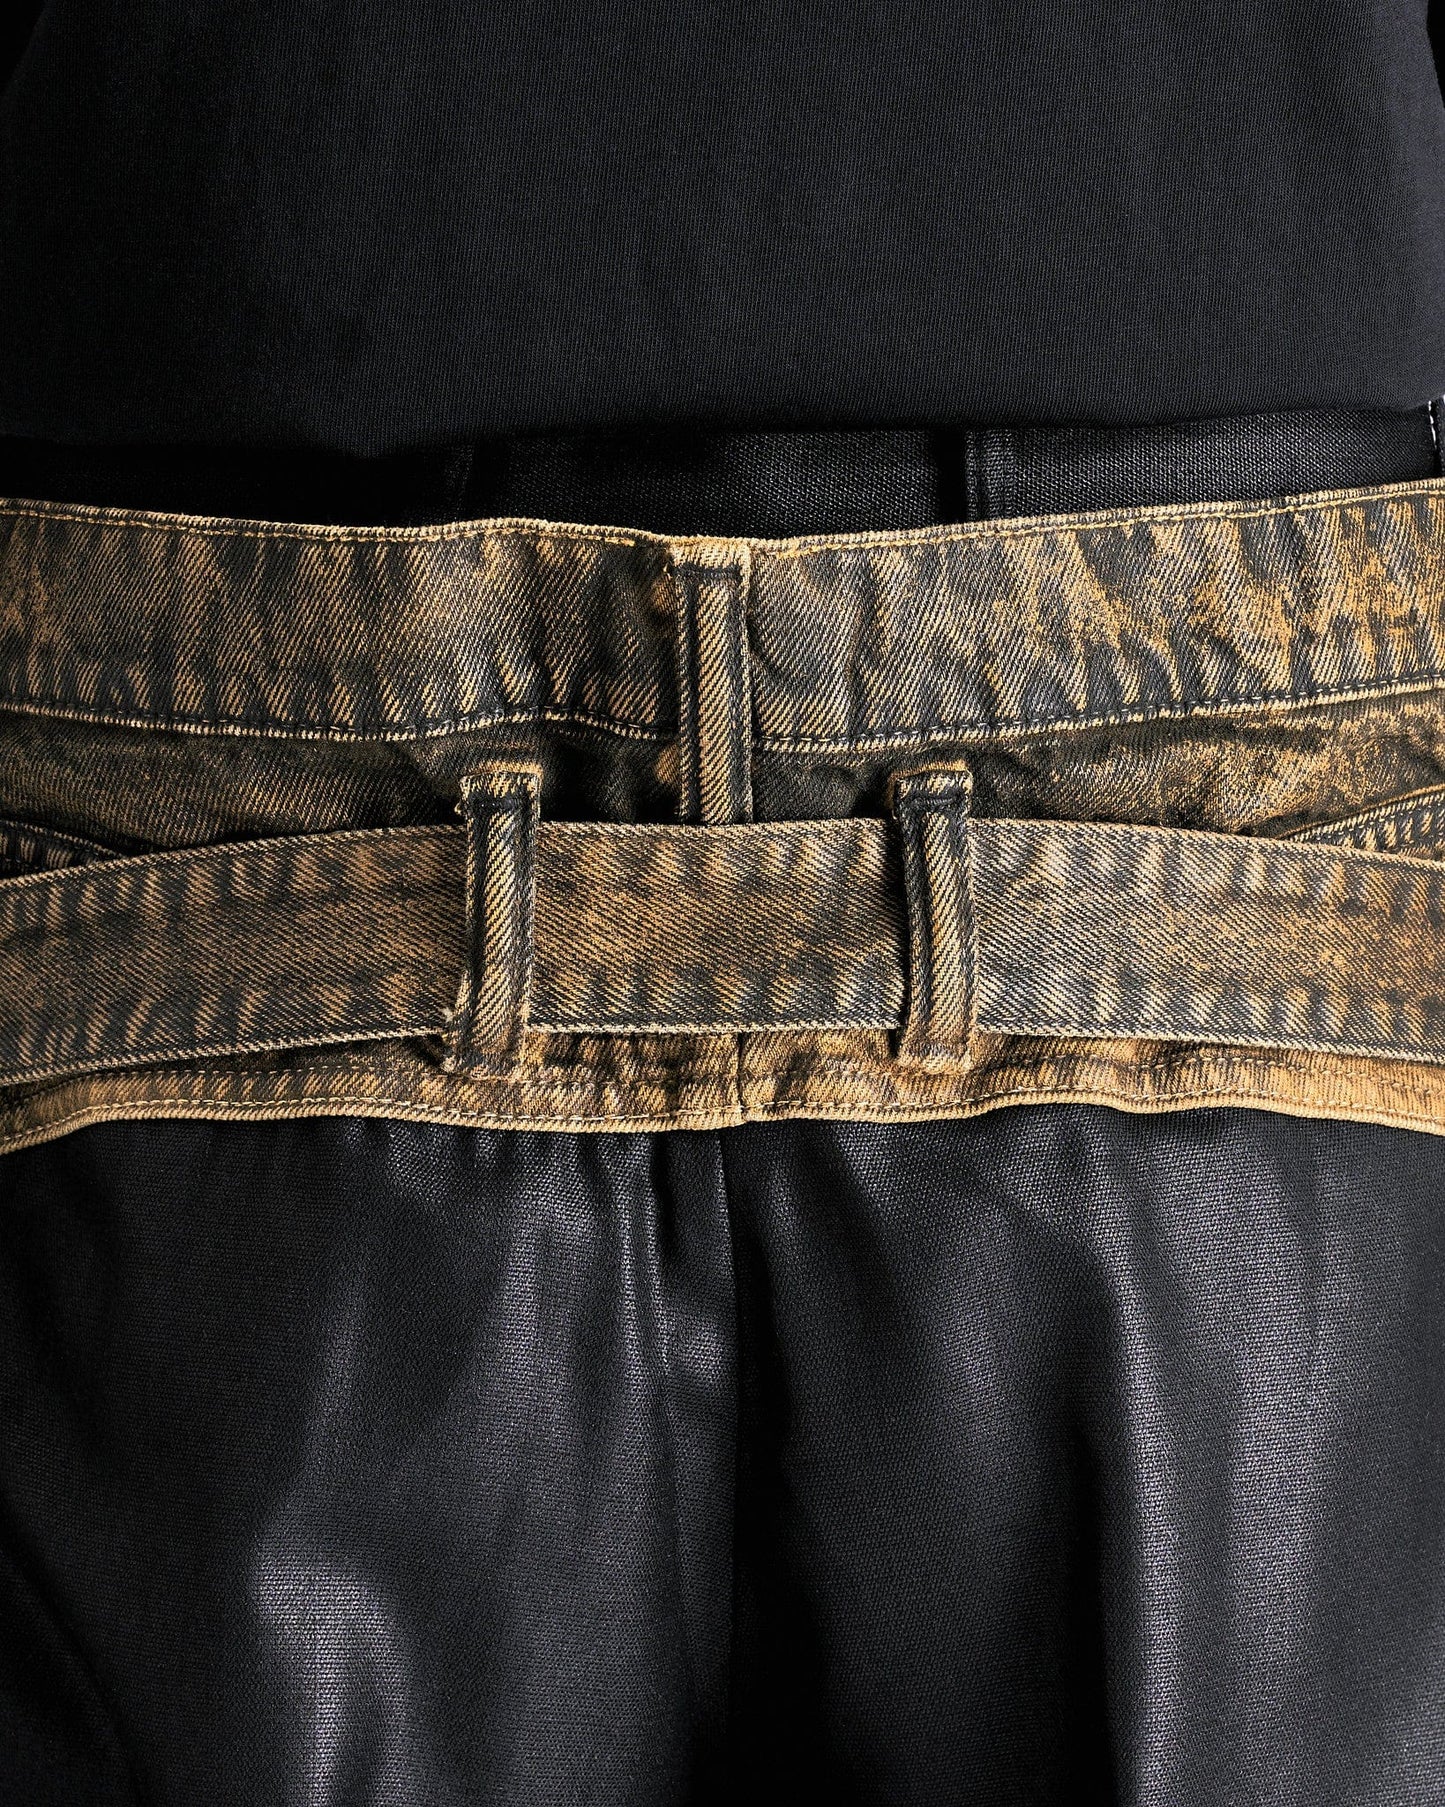 Acne Studios Men's Pants Paneled Trousers in Black/Black